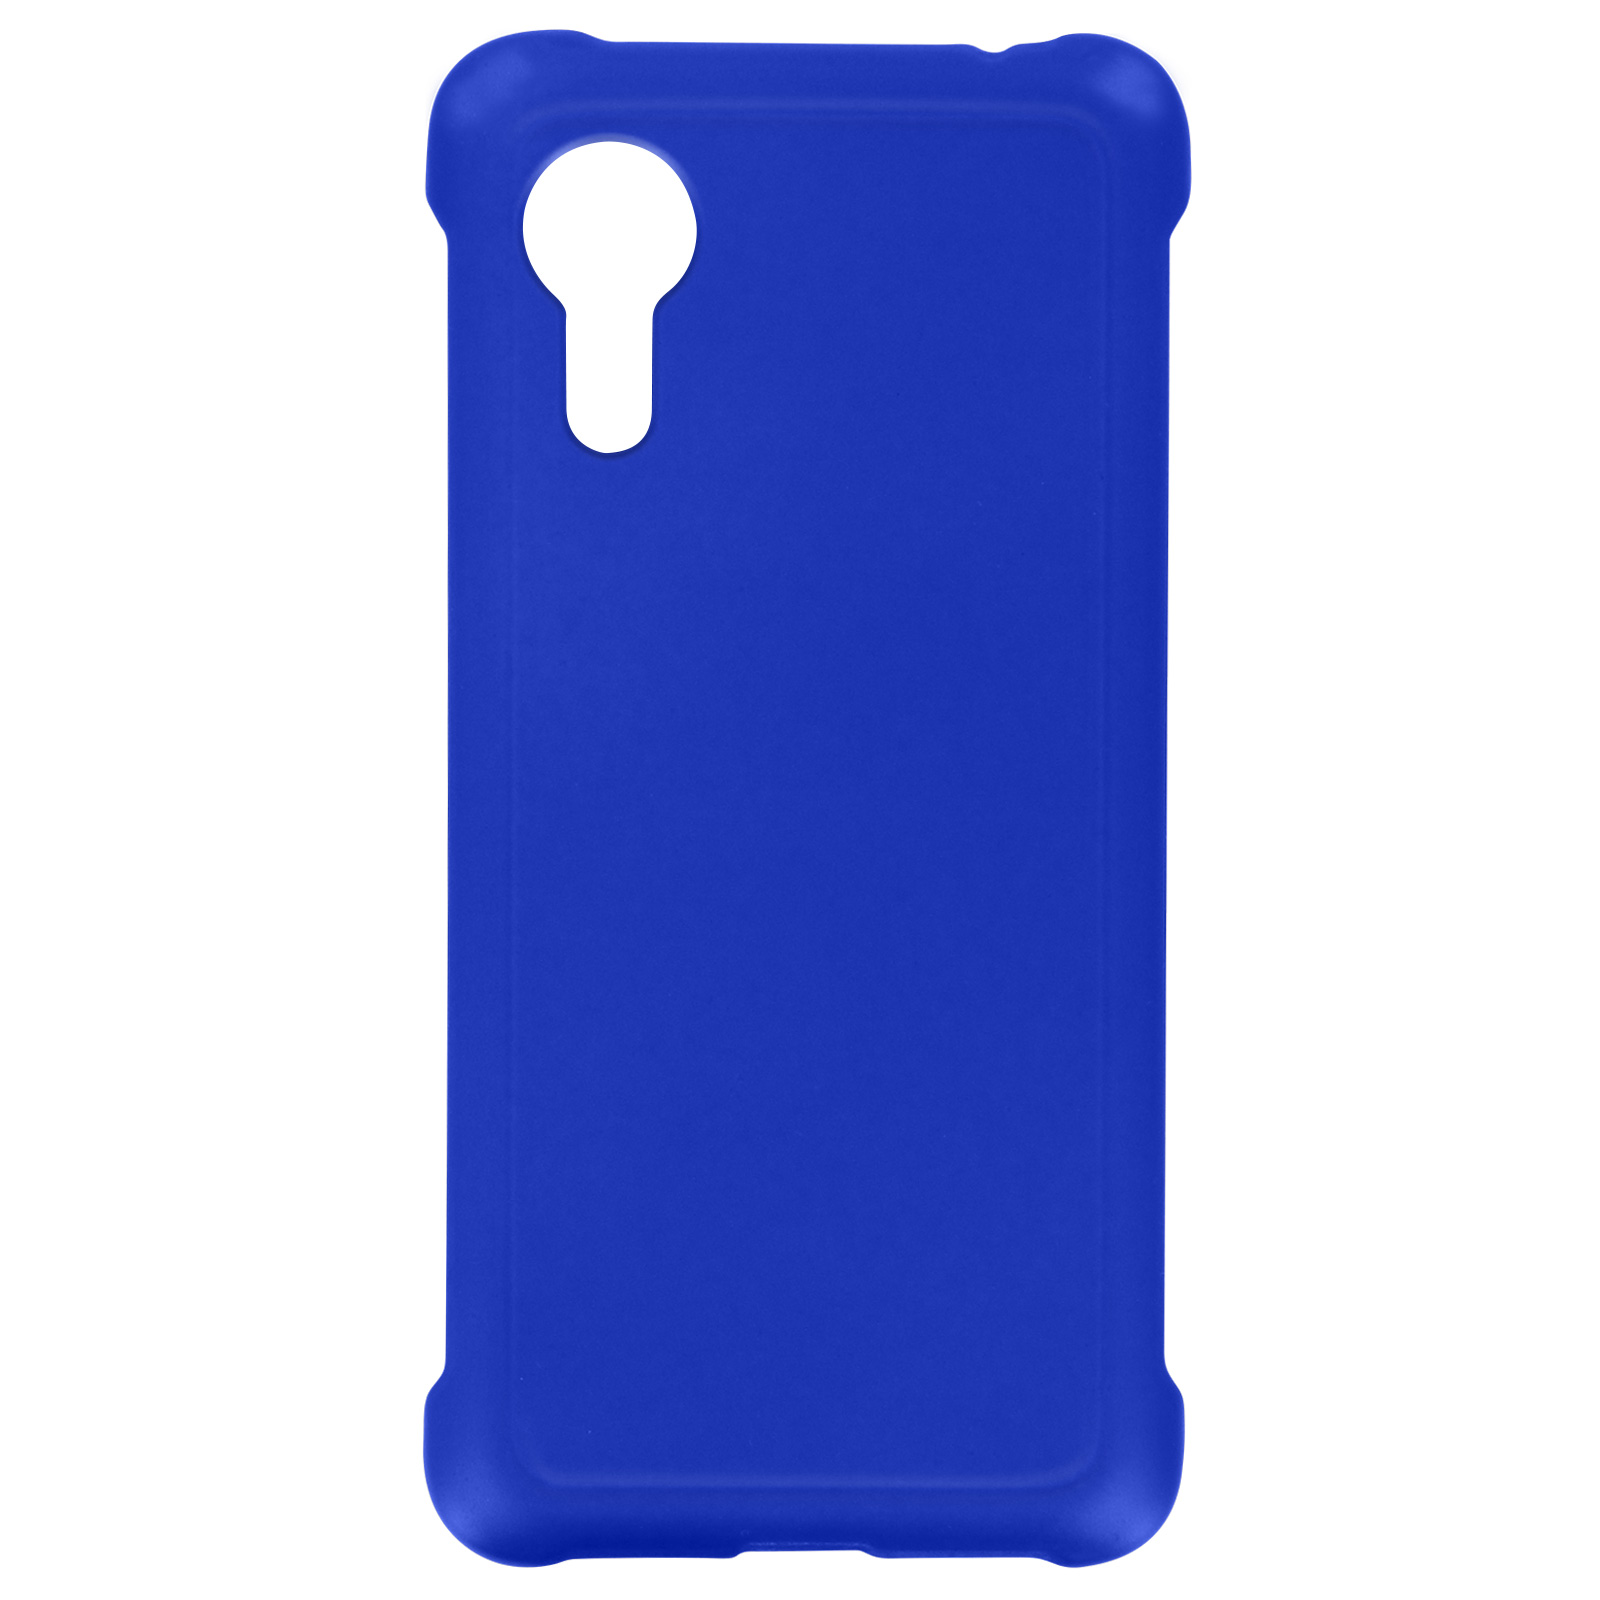 Backcover, Galaxy 5, Xcover Blau Samsung, AVIZAR Series, Rubber